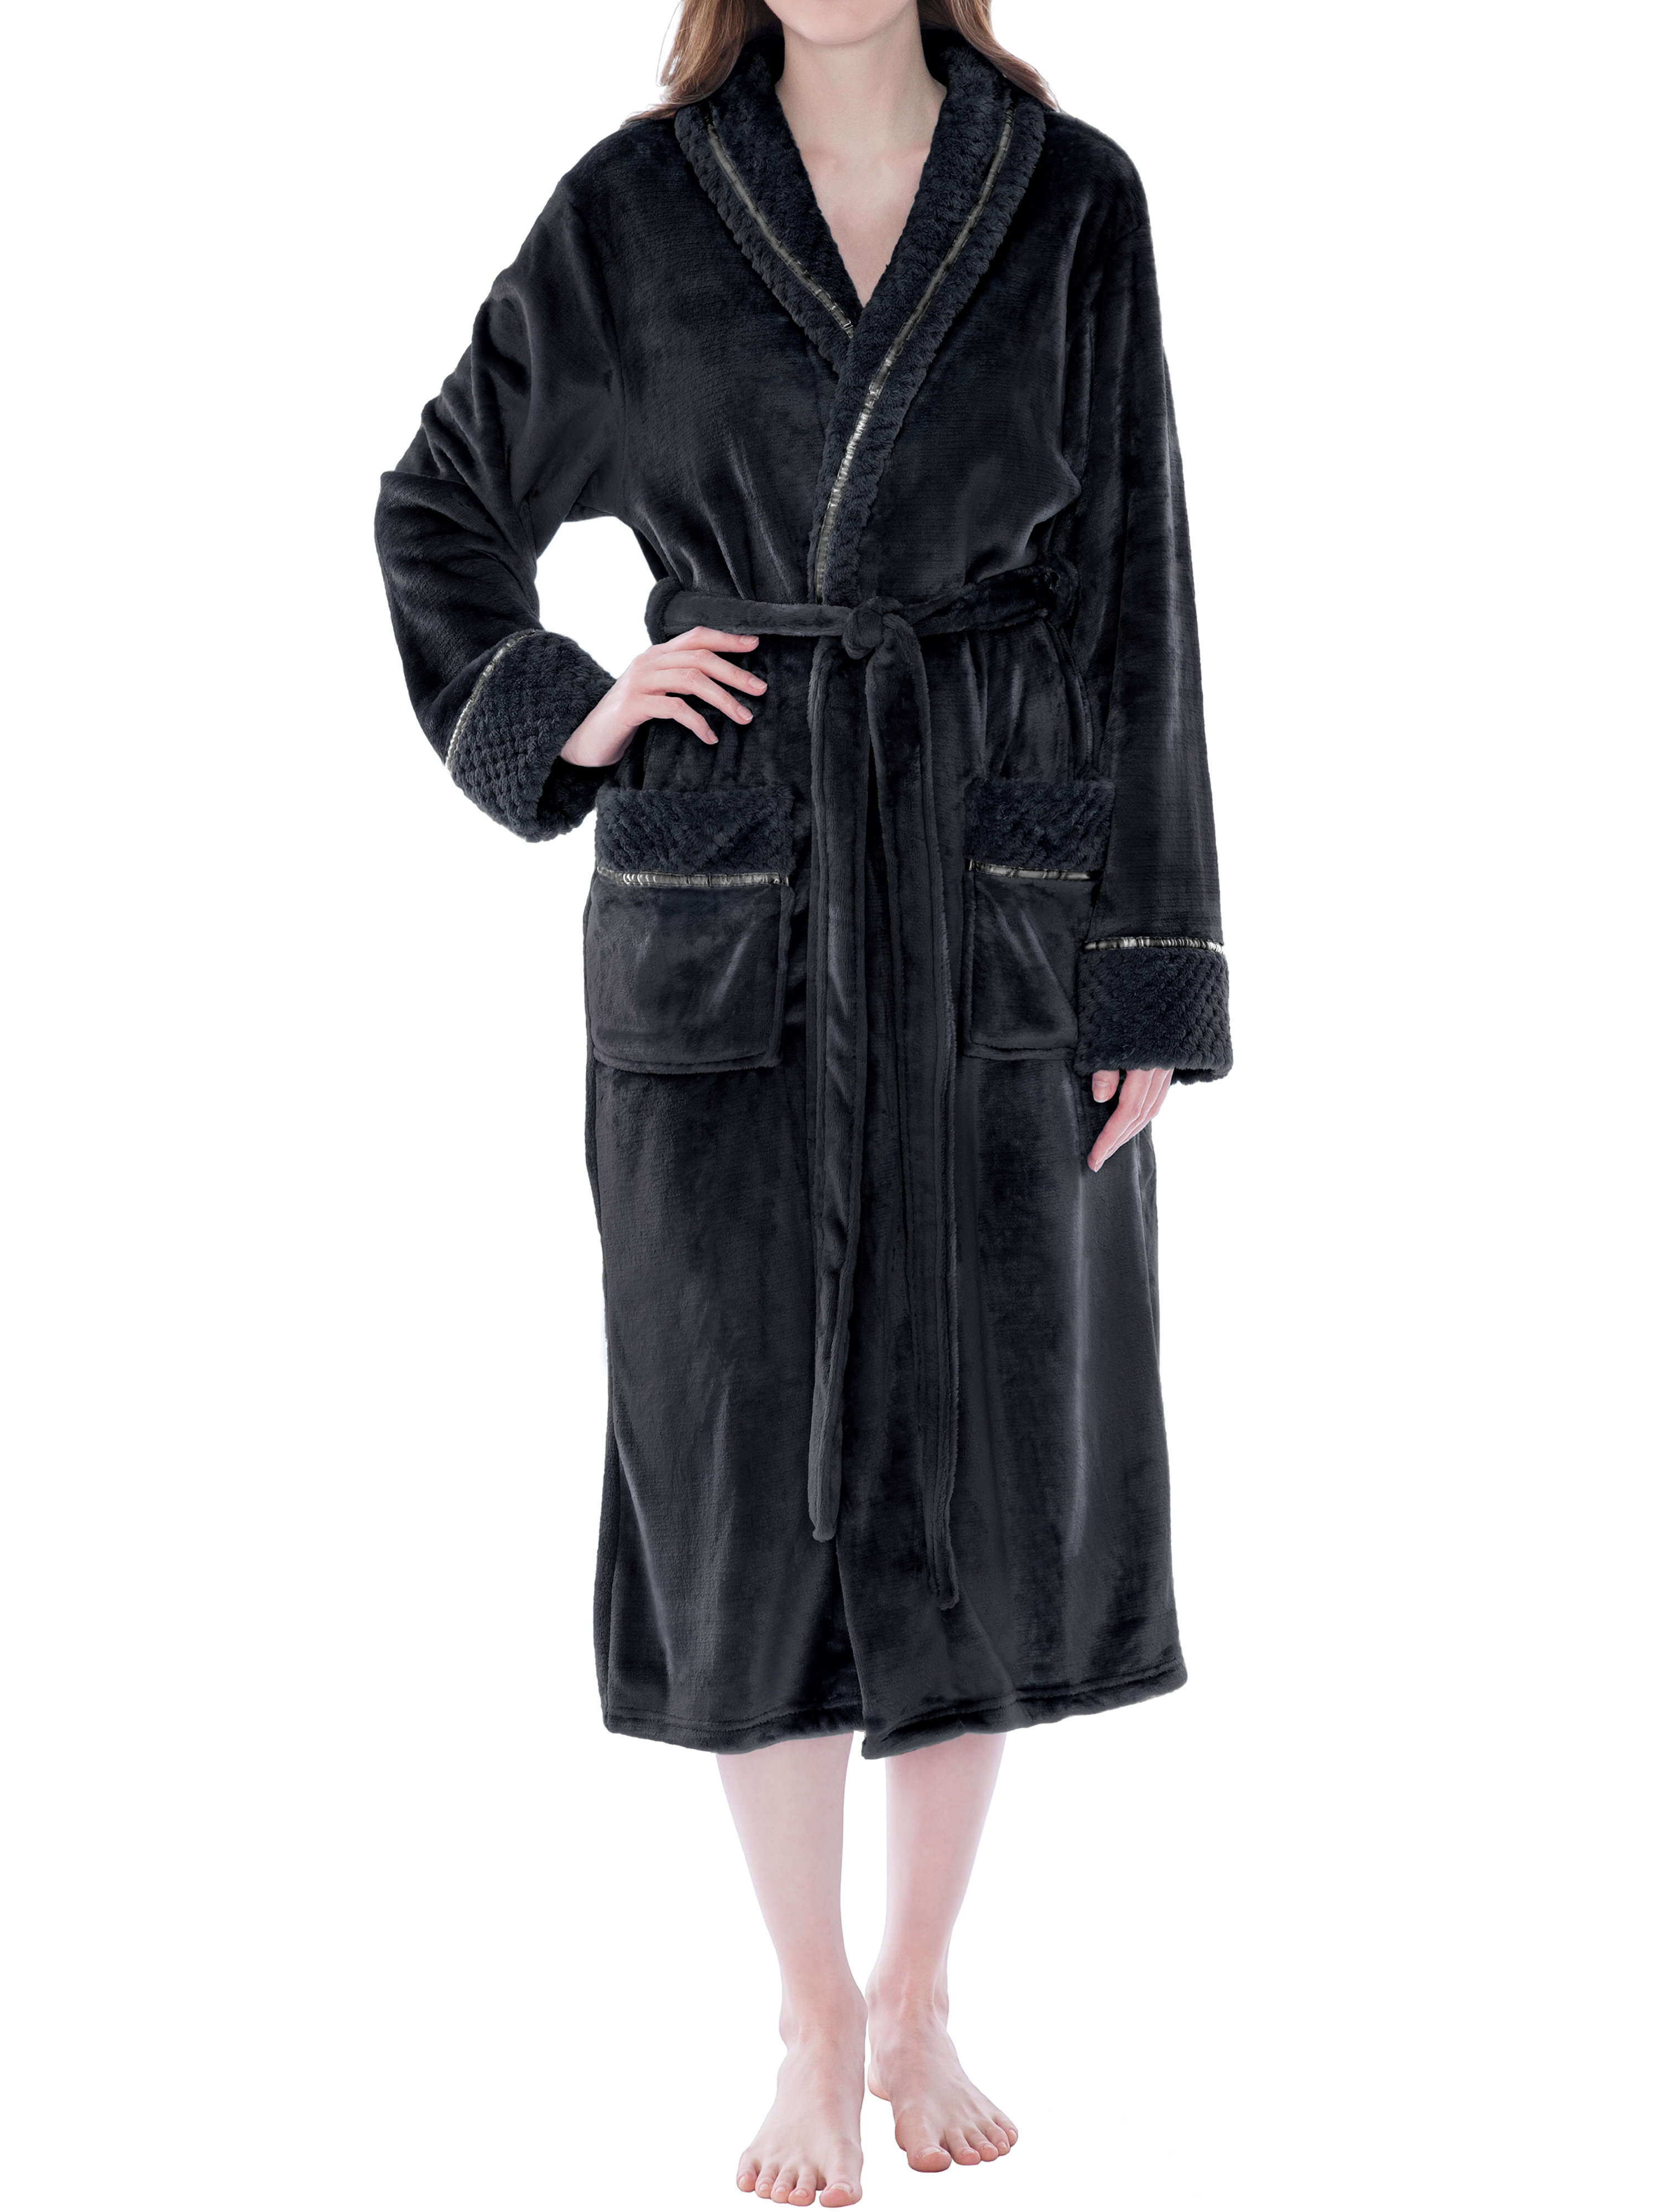 PAVILIA Soft Plush Women Fleece Robe, Black Cozy Bathrobe, Female Long Spa Robe, Warm Housecoat, Satin Waffle Trim, S/M - image 1 of 8